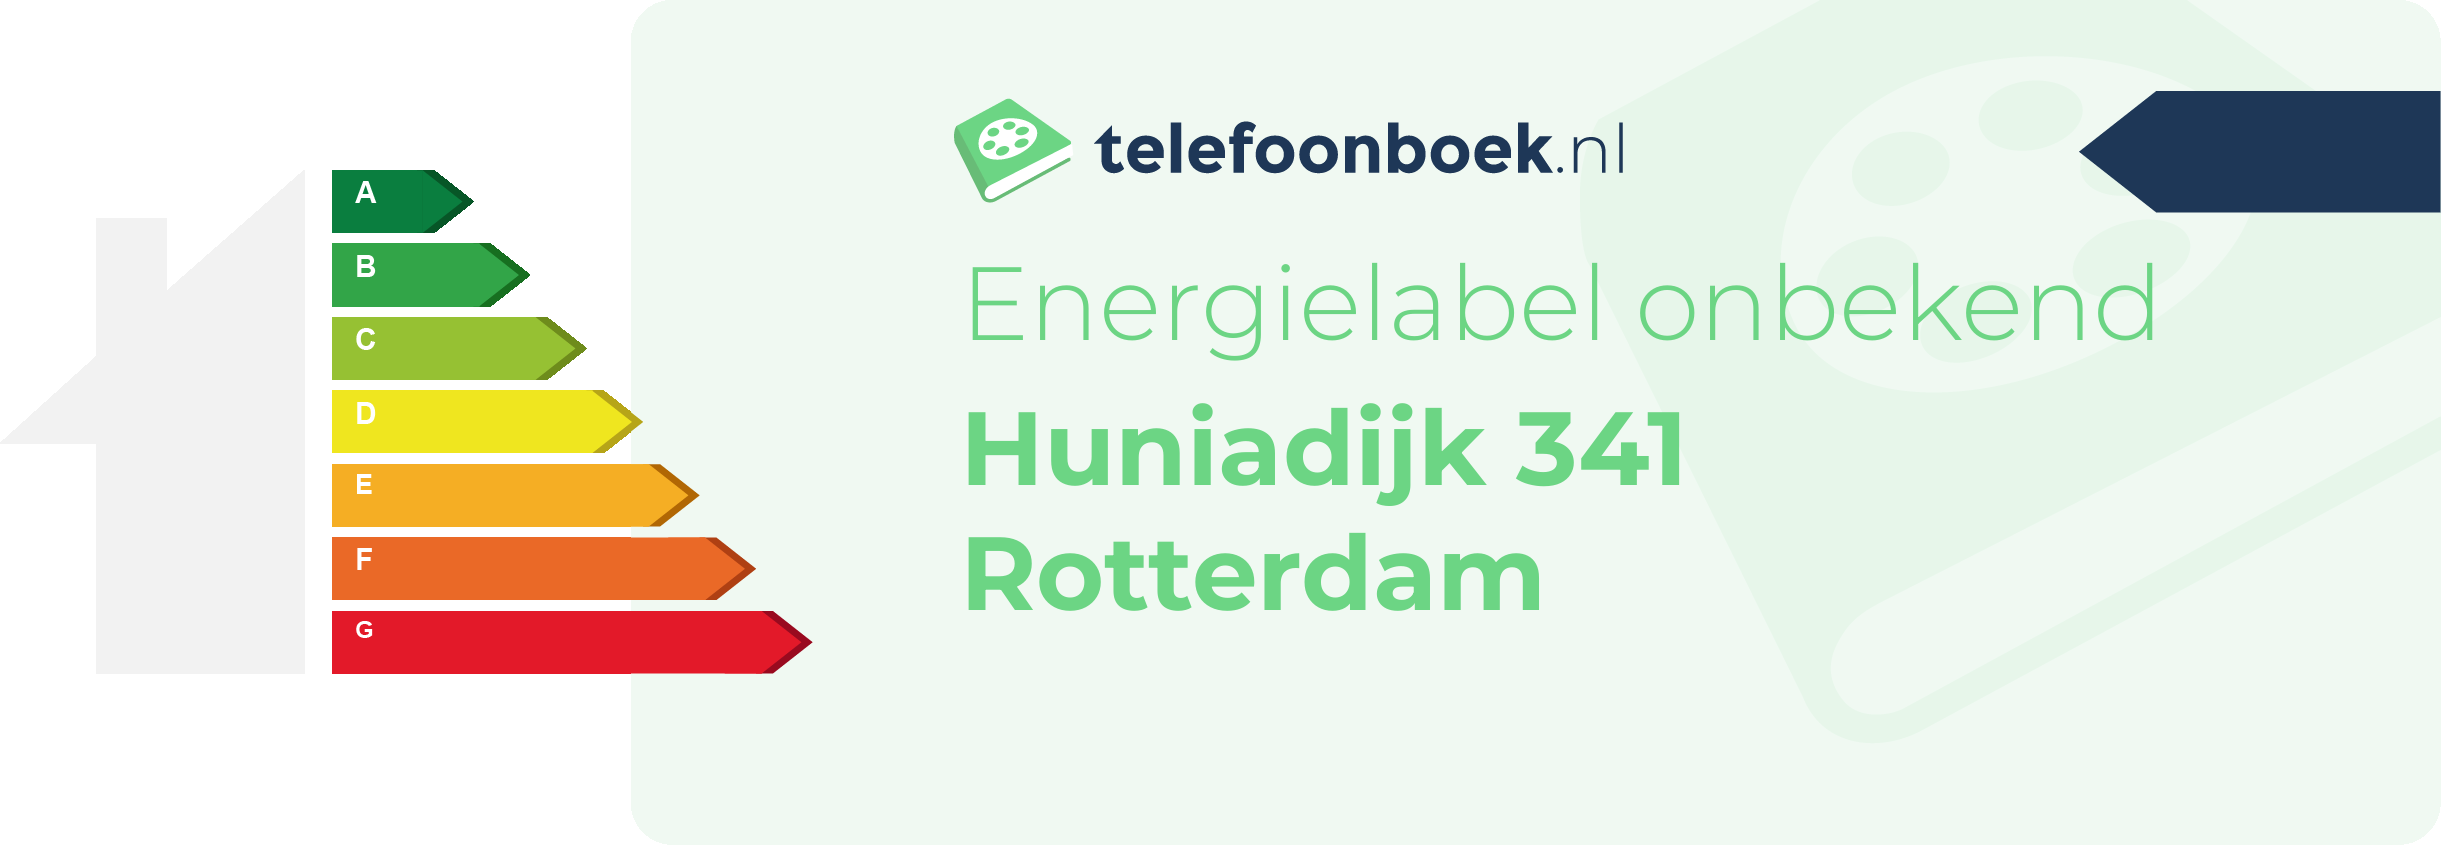 Energielabel Huniadijk 341 Rotterdam